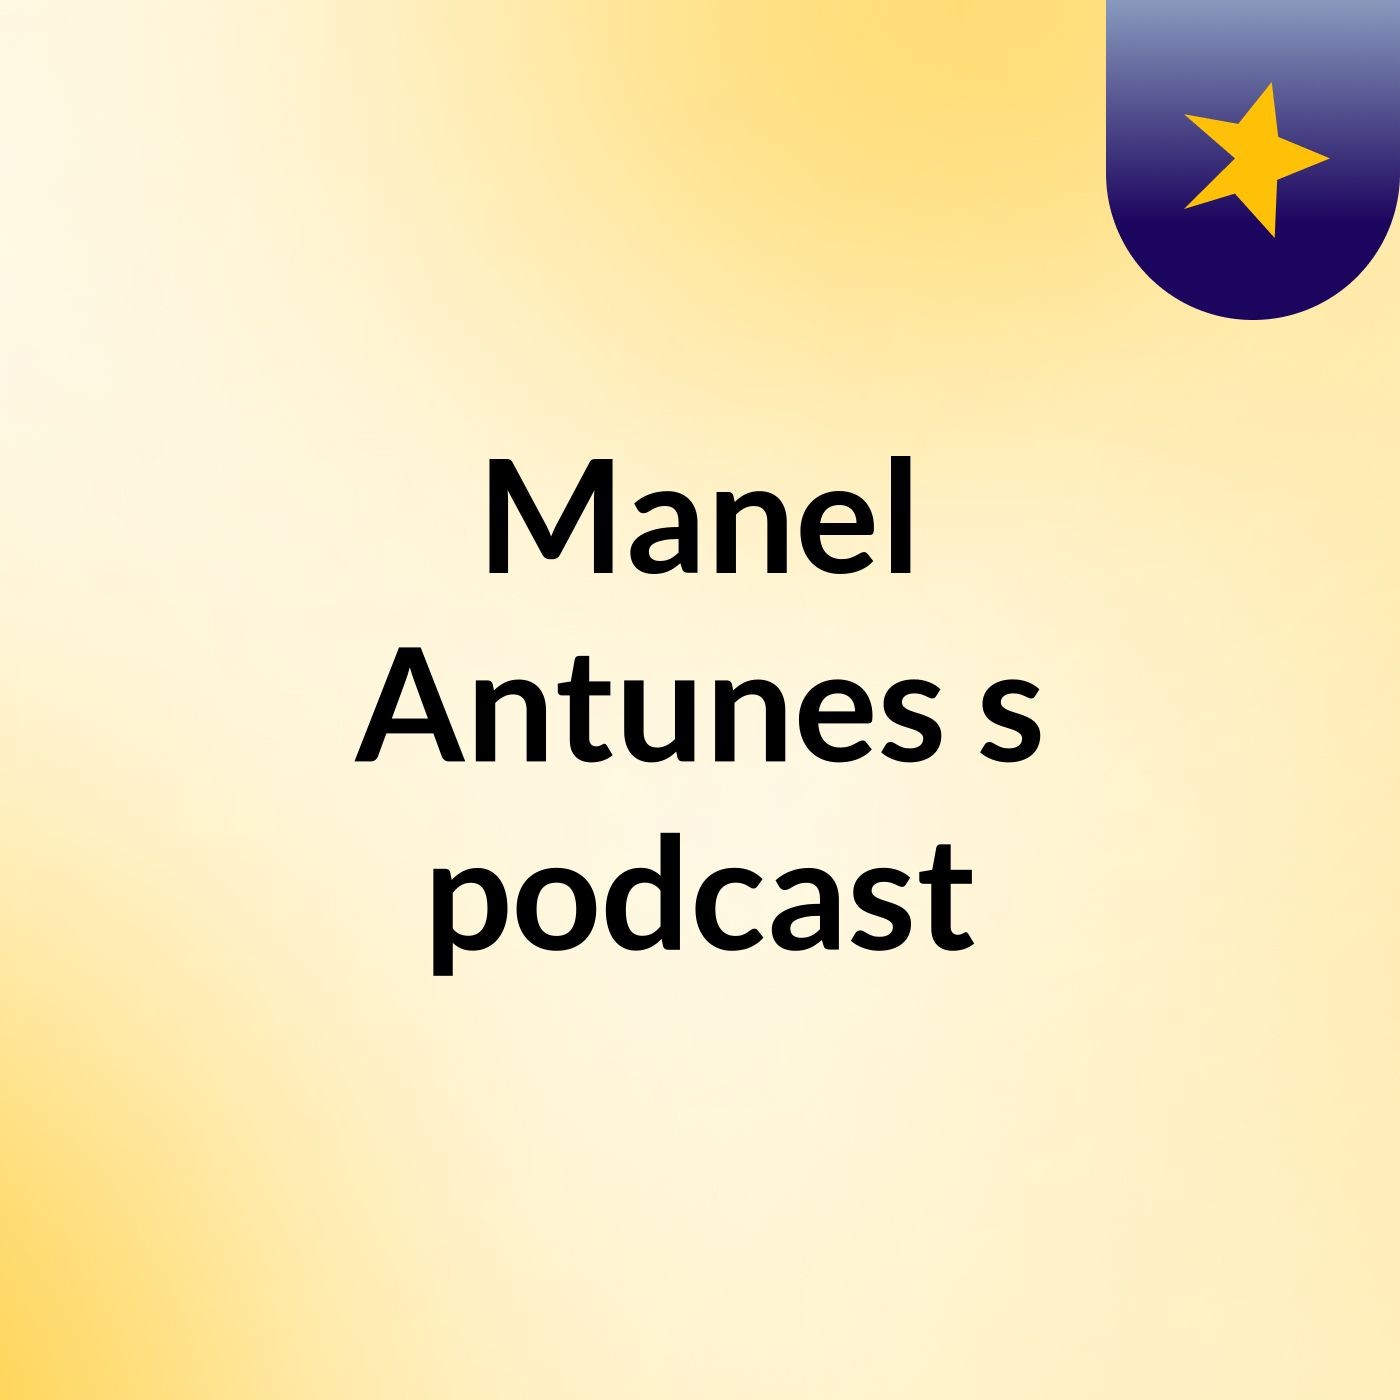 Manel Antunes's podcast